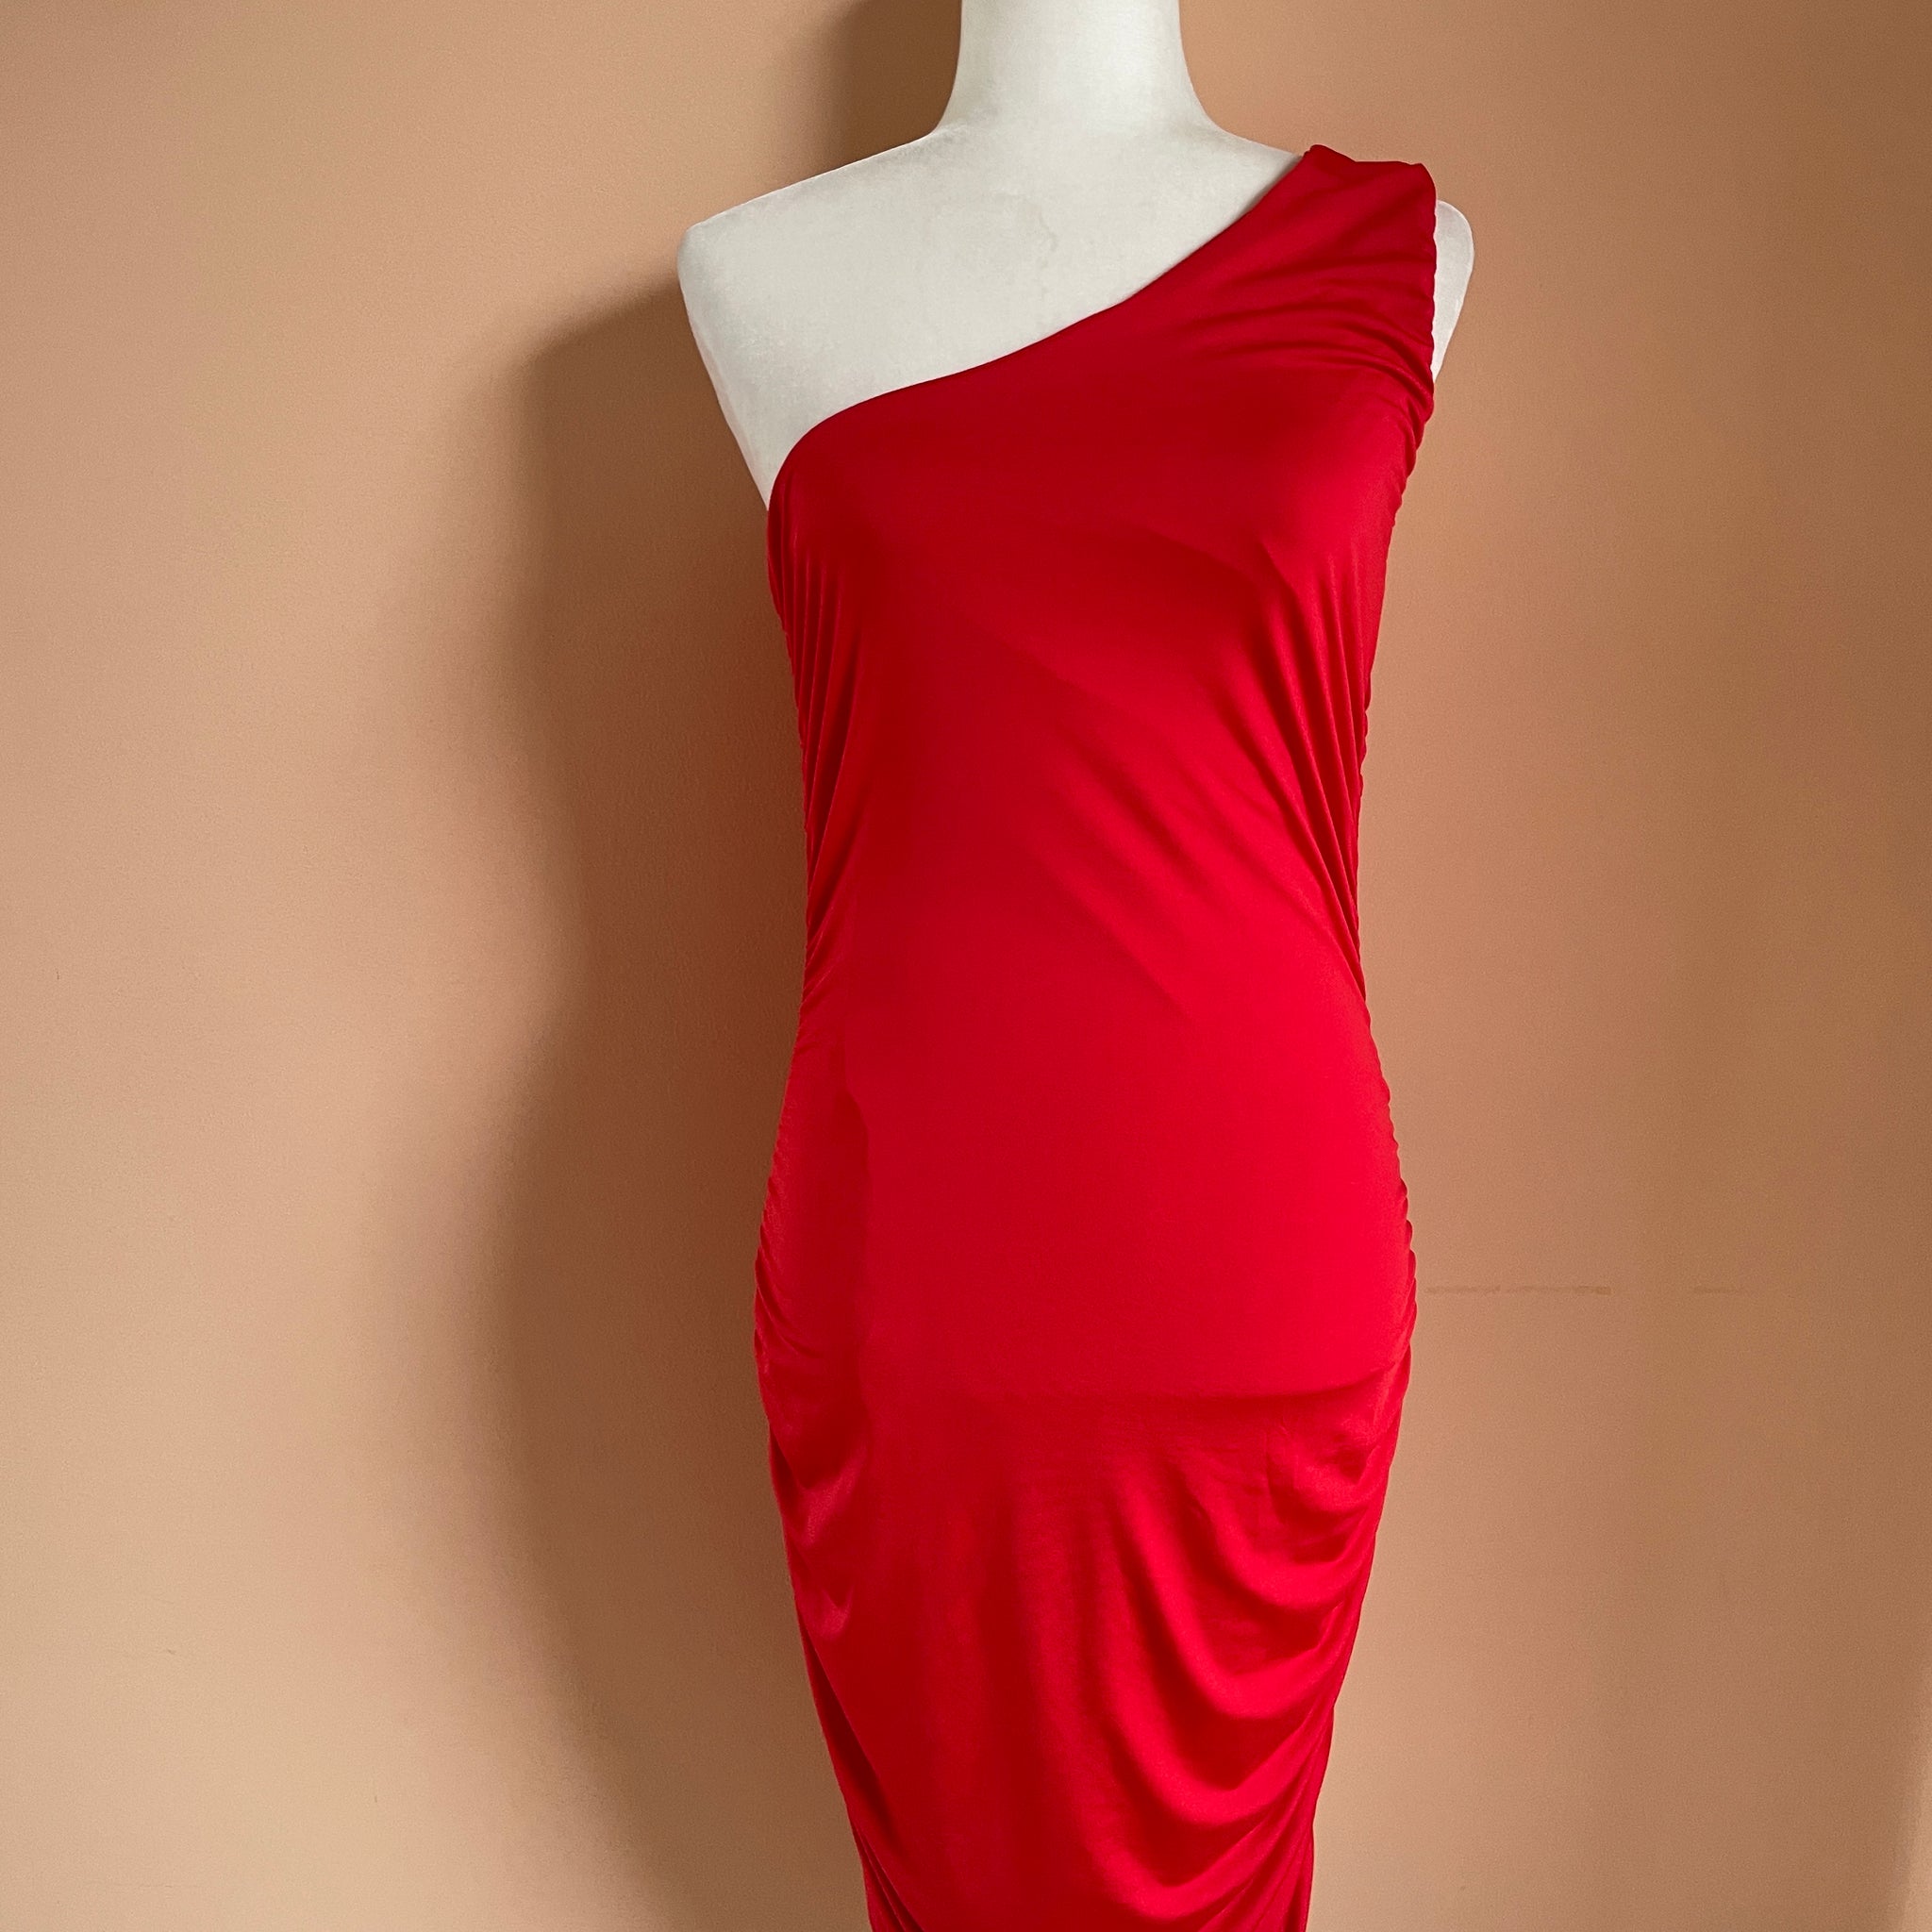 Strapless Red Dress